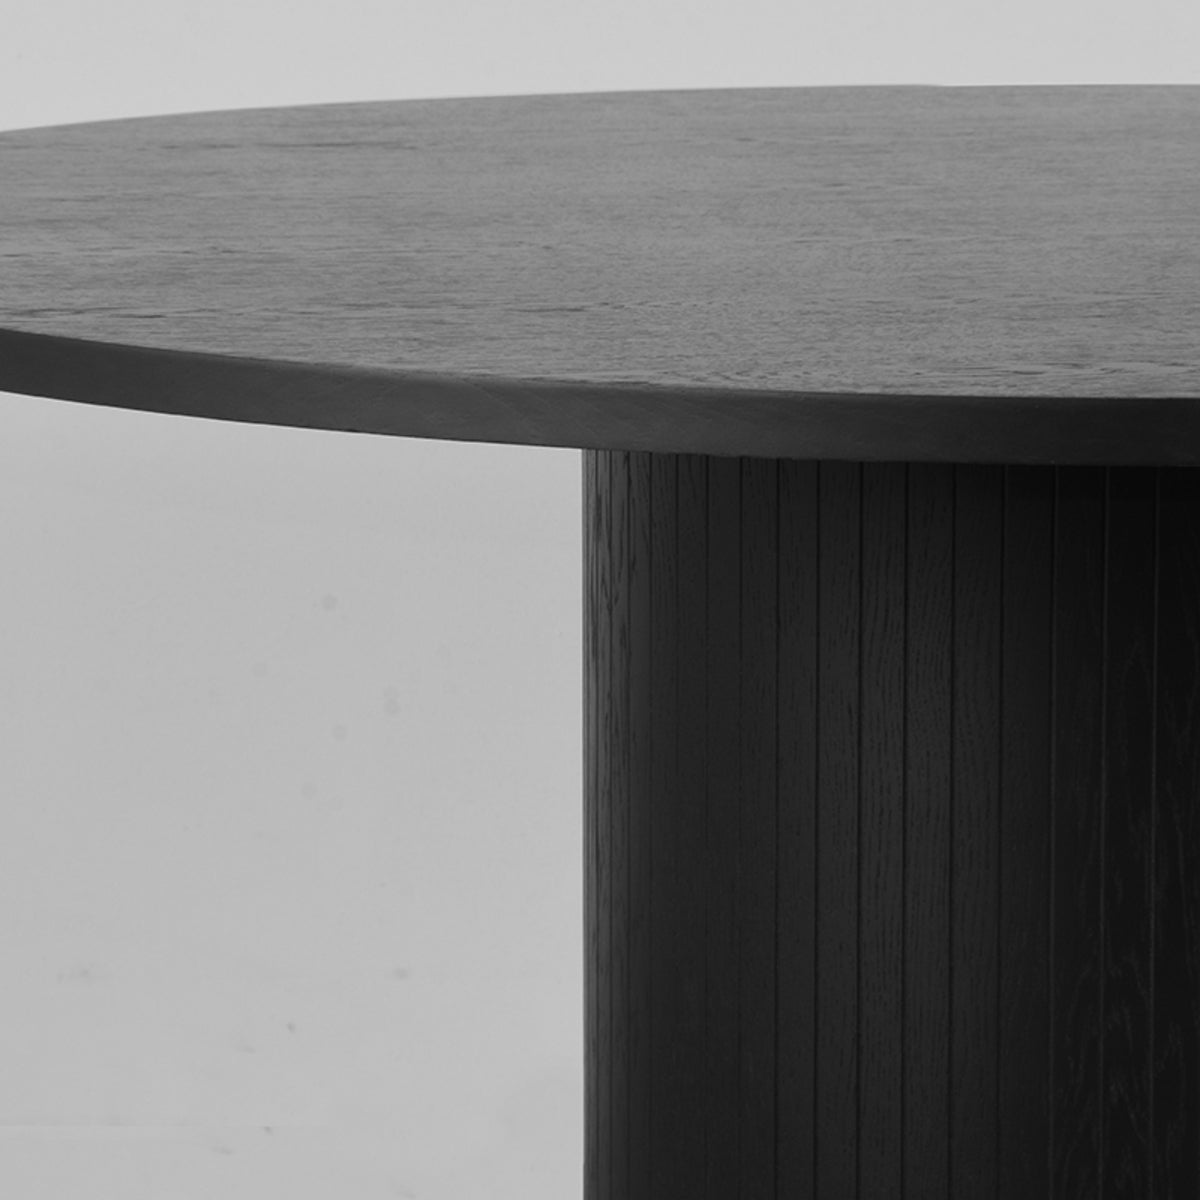 LABEL51 Dining room table Oliva - Black - Oak - 130 cm - Round